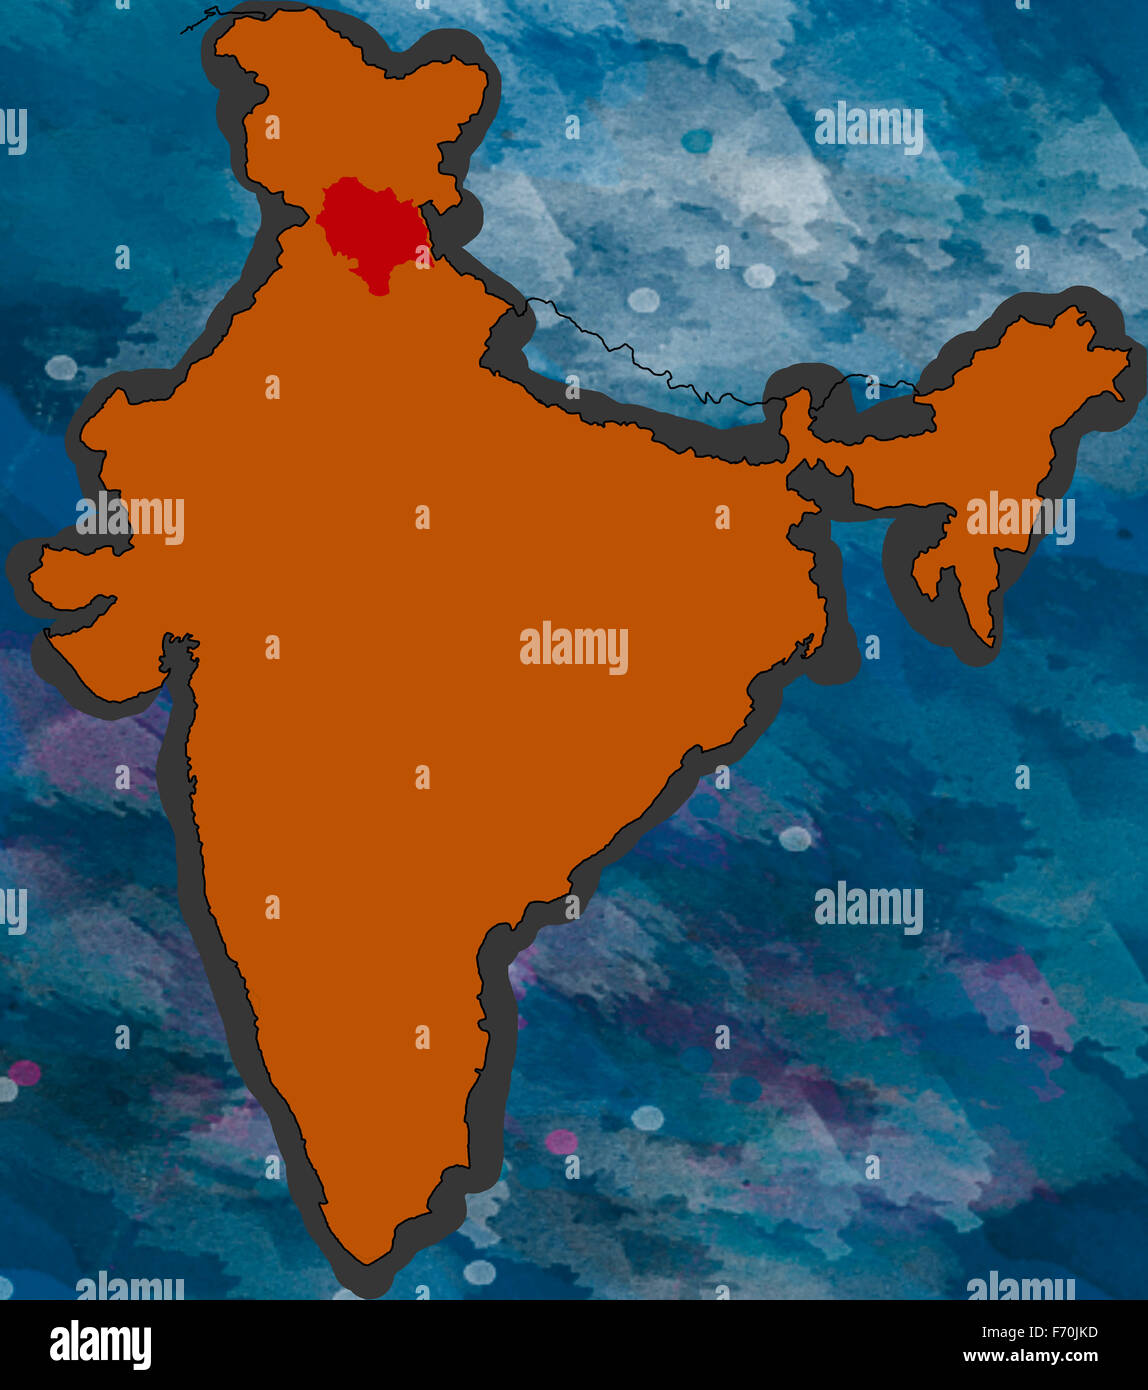 Illustration, himachal pradesh location map, india, asia Stock Photo